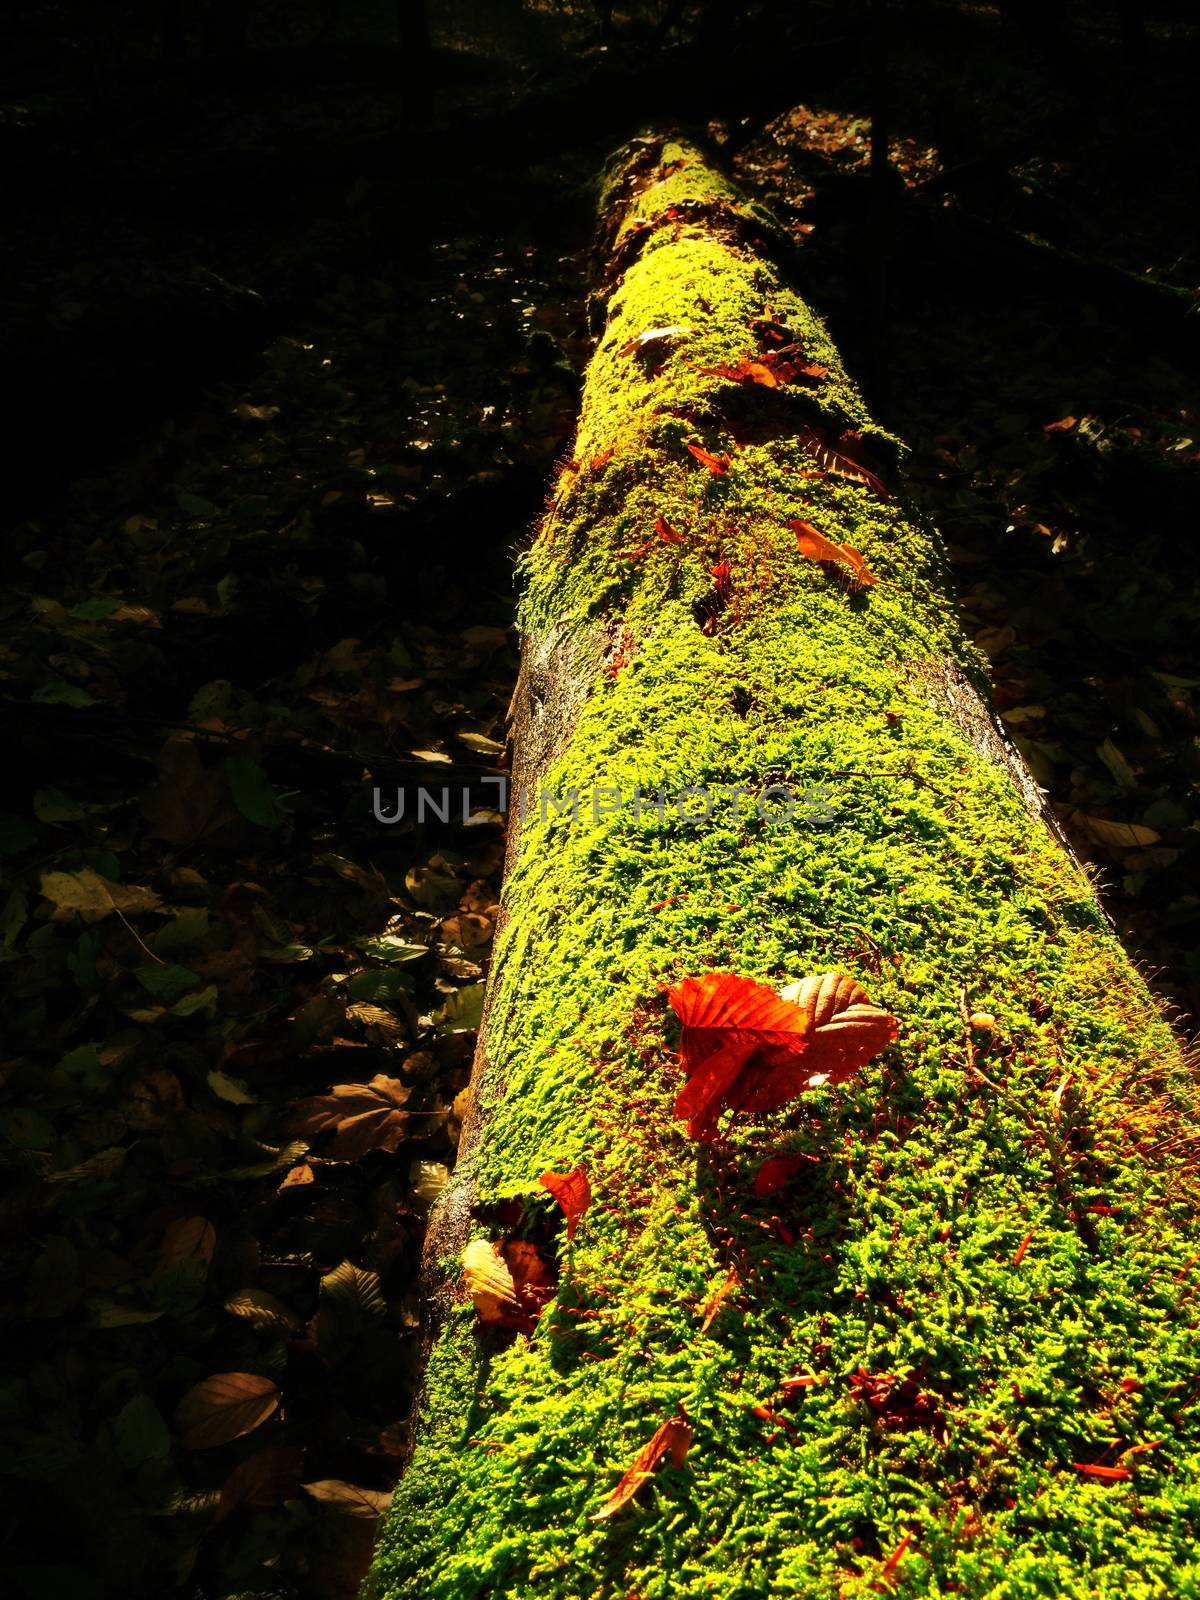 Brown mushrooms growing in moss on fallen tree by rdonar2